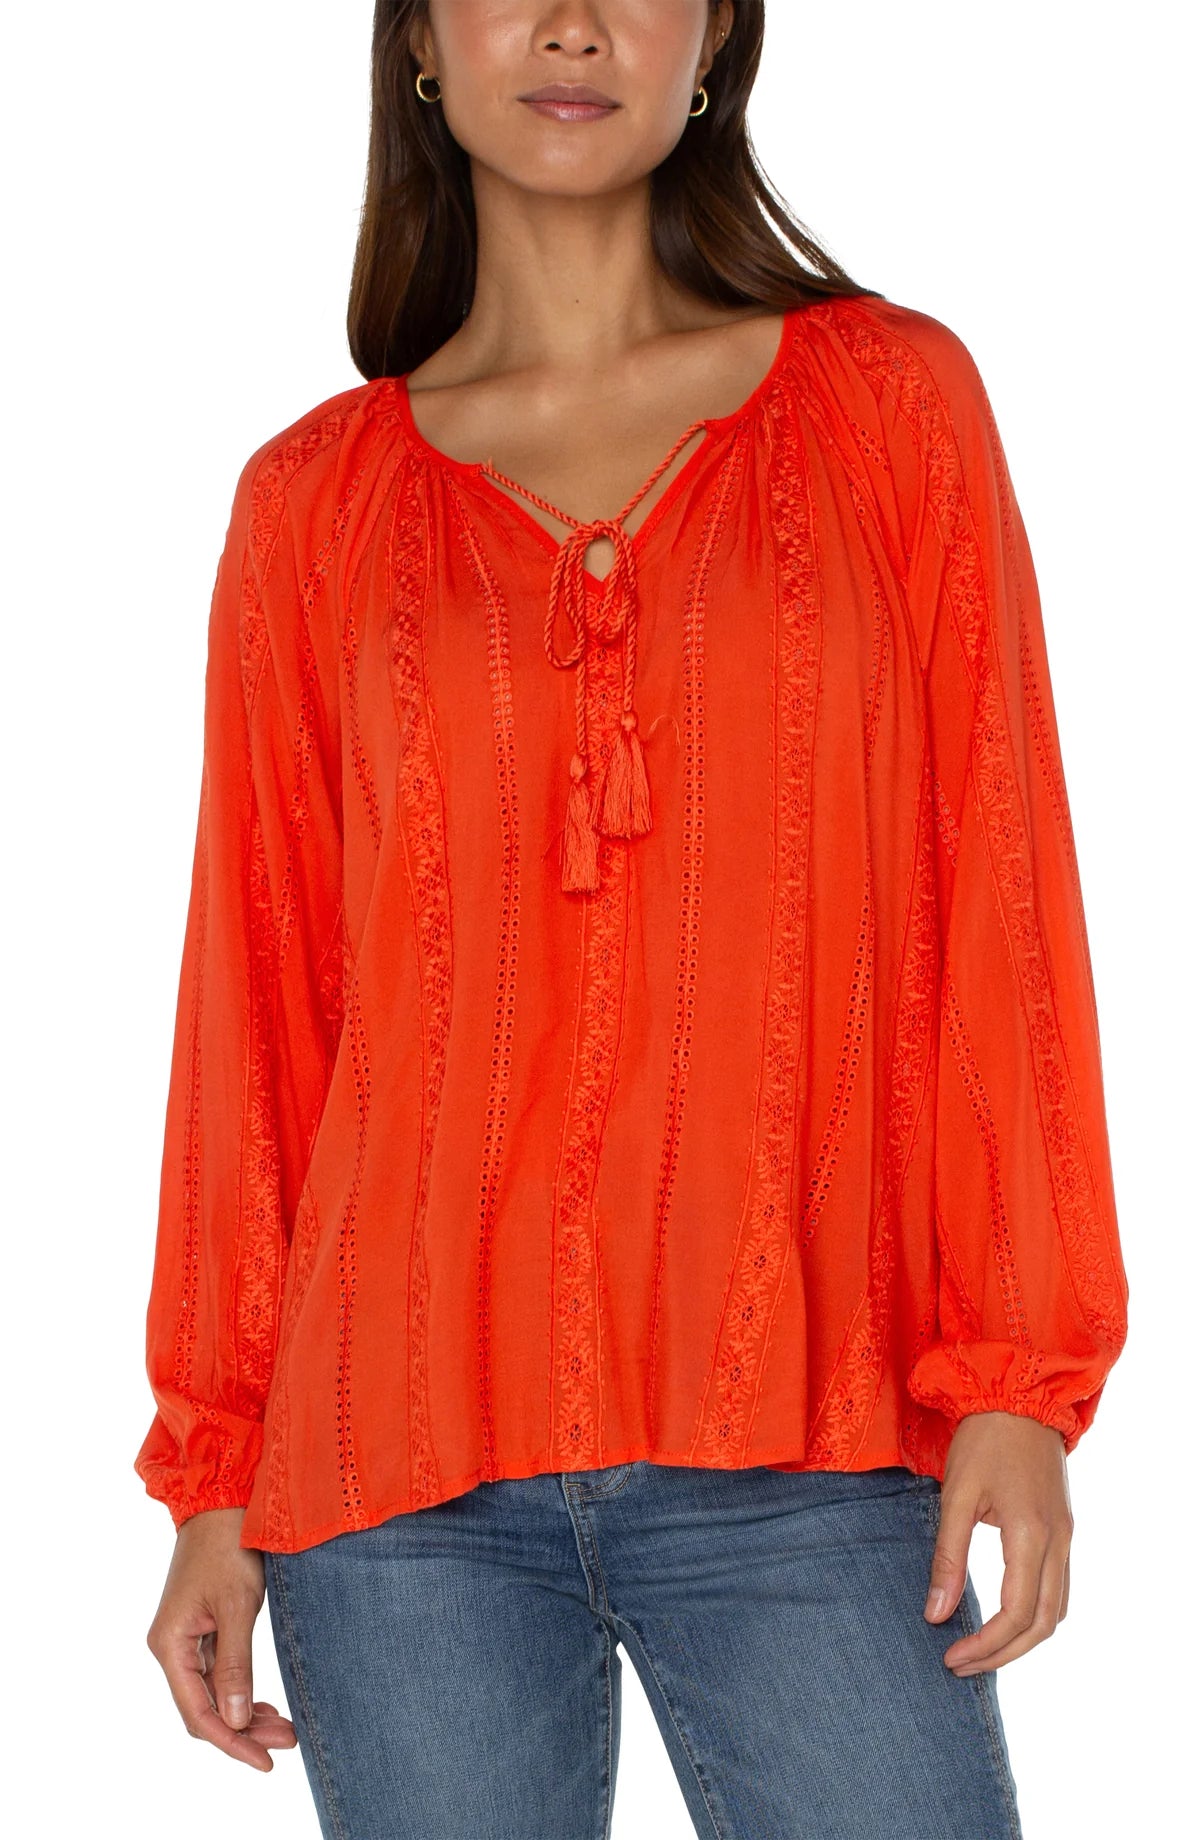 LPLA Coral Blaze blouse